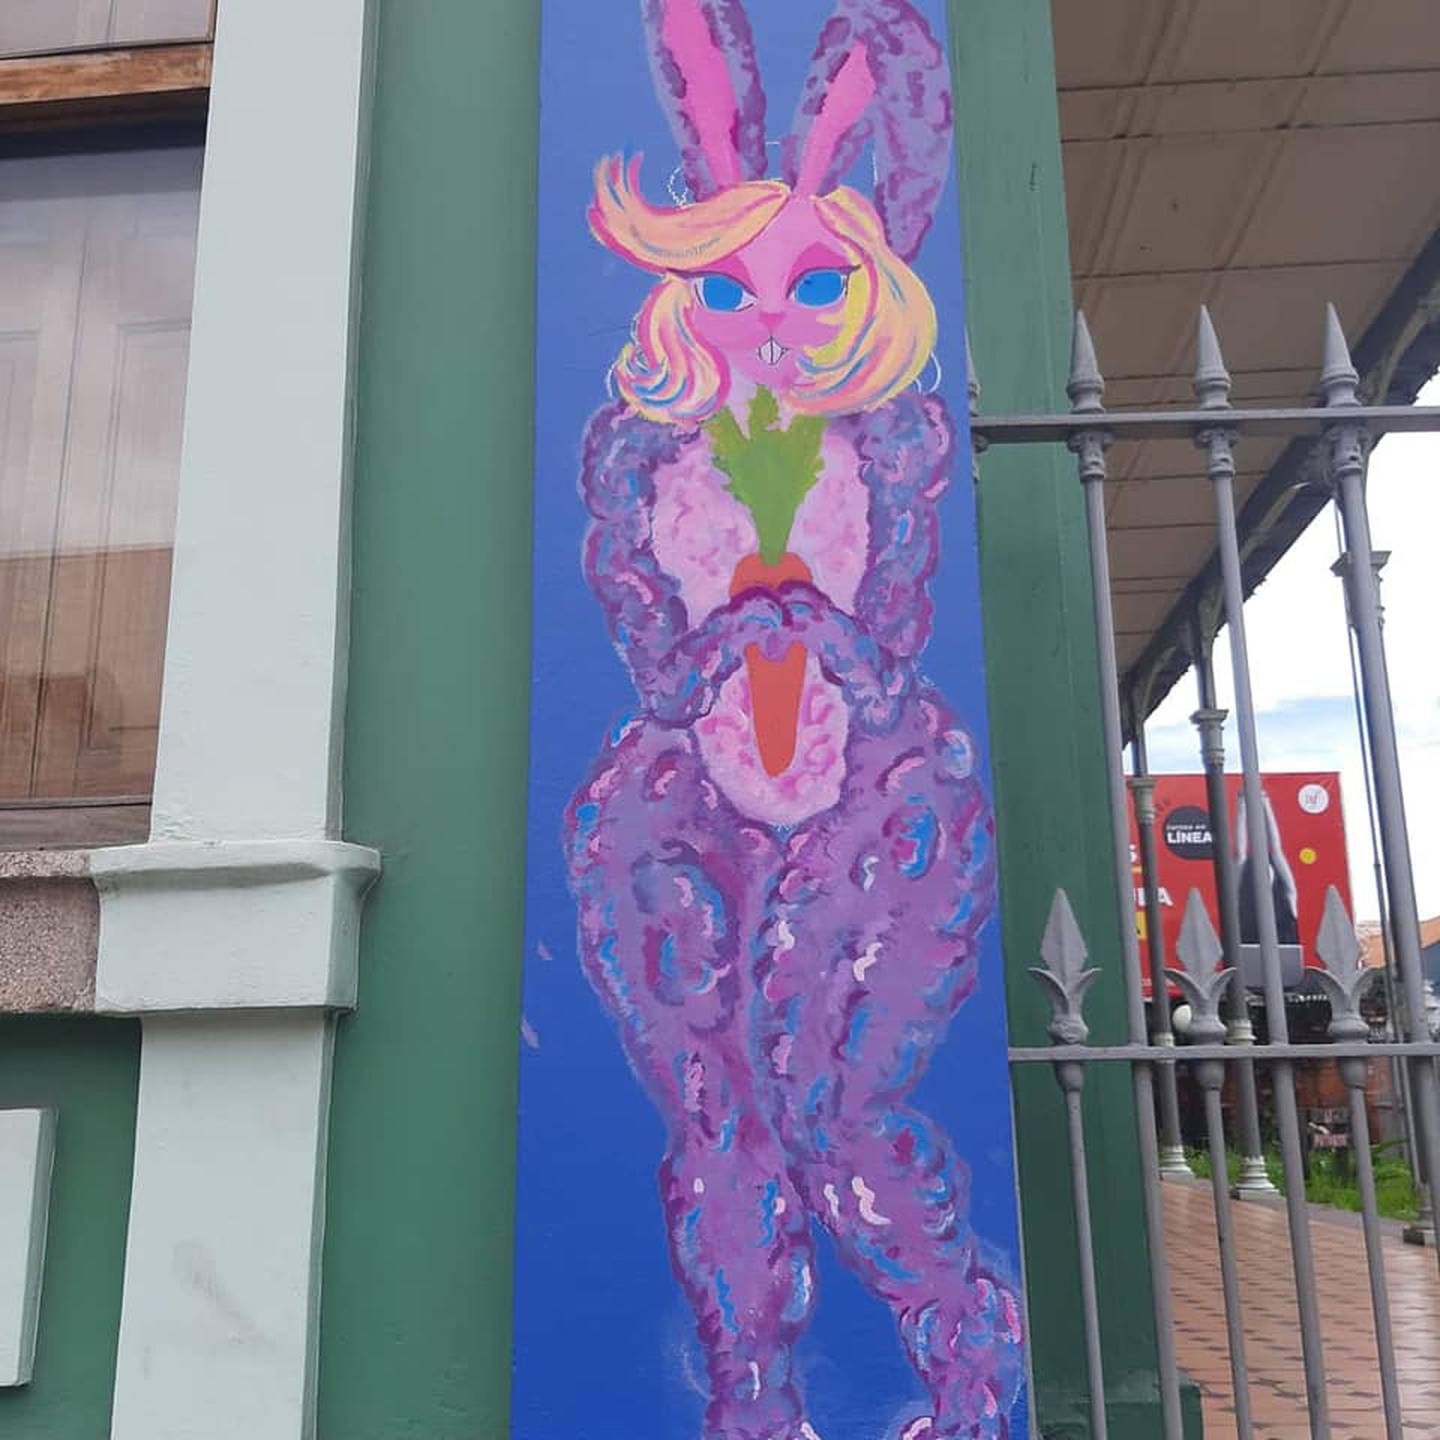 La Alianza Francesa contrató a Natalia Porras, artista trans para hacer un mural sobre la violencia trans en San José